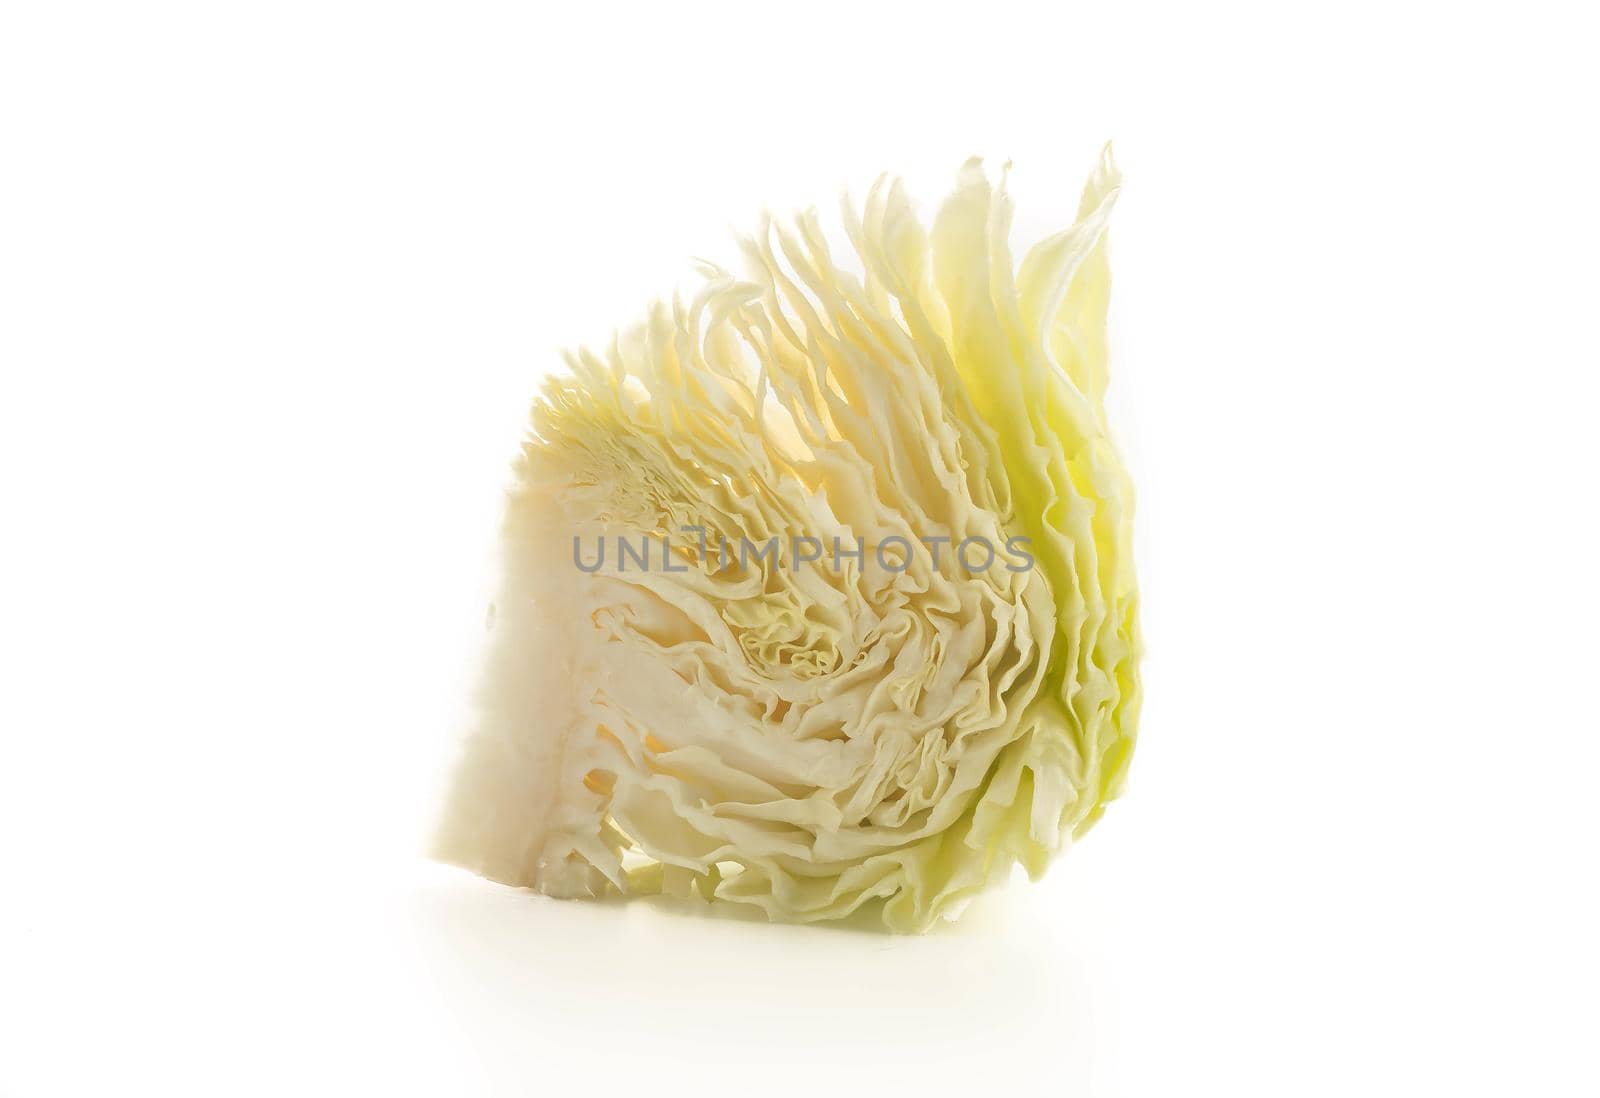 fresh cabbage on white background